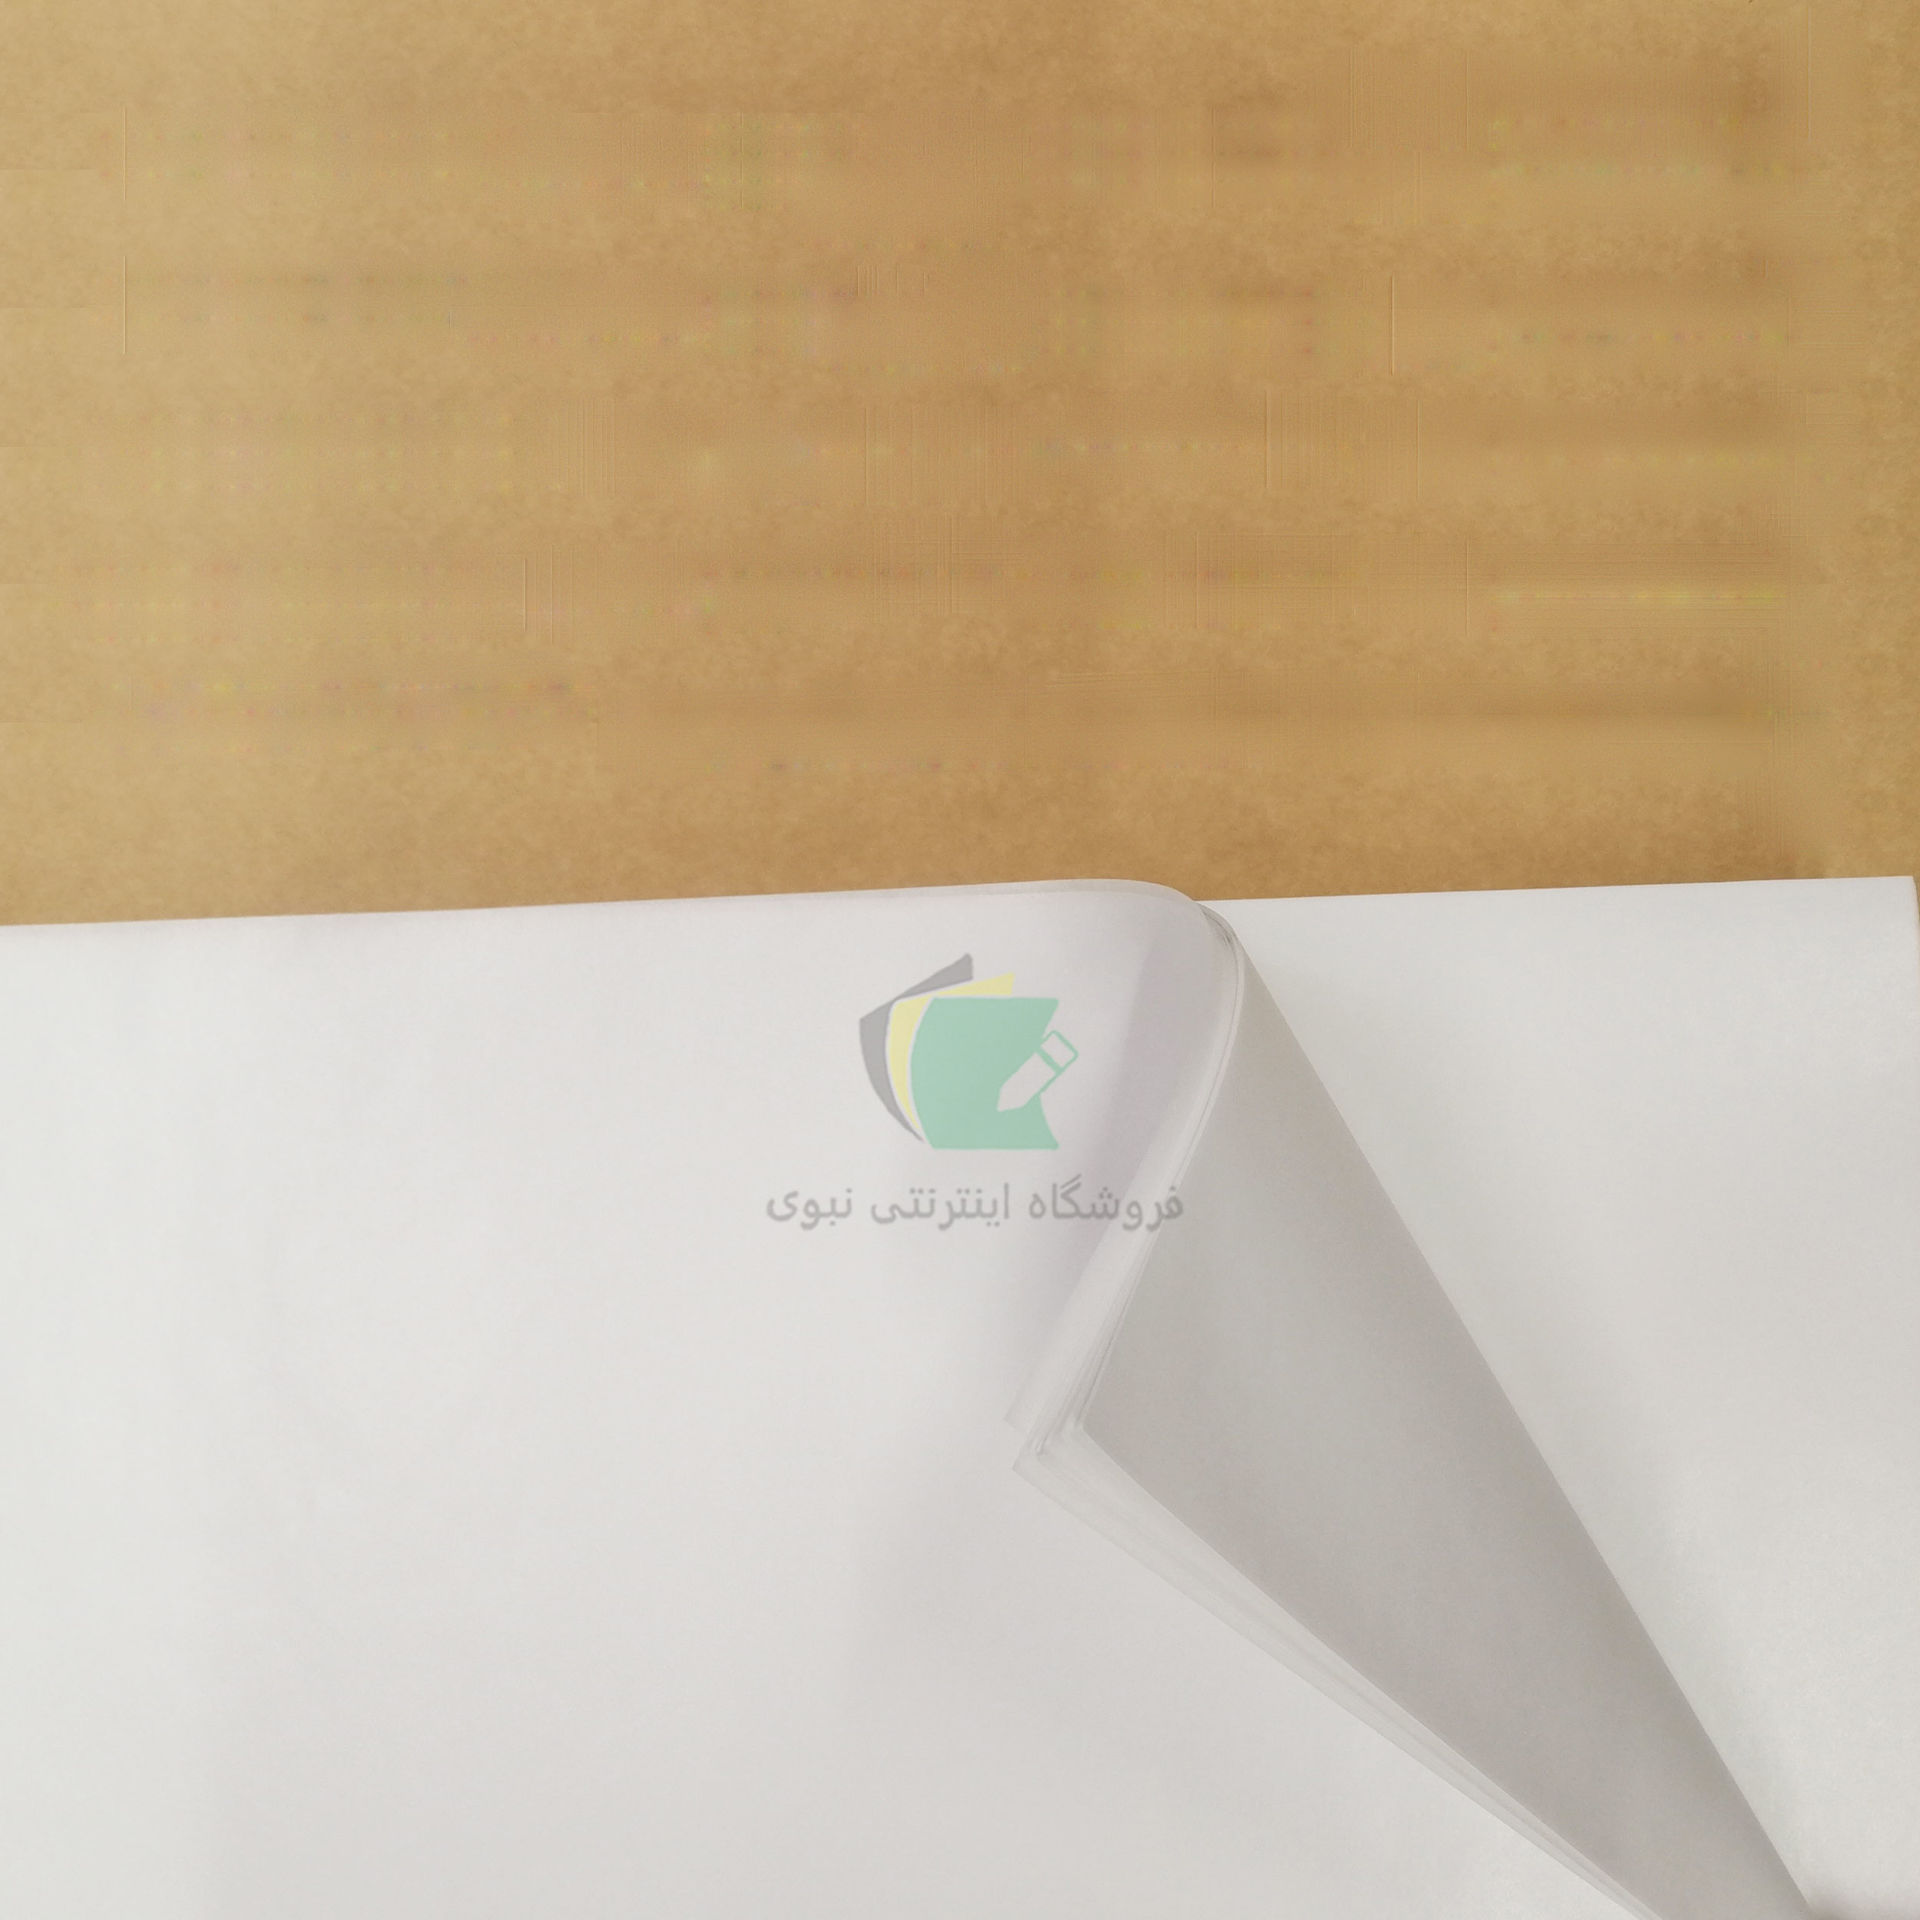 کاغذ مومی سولفات روغنی 40 گرم مدل ساندویچ با قابلیت چاپ و طراحی